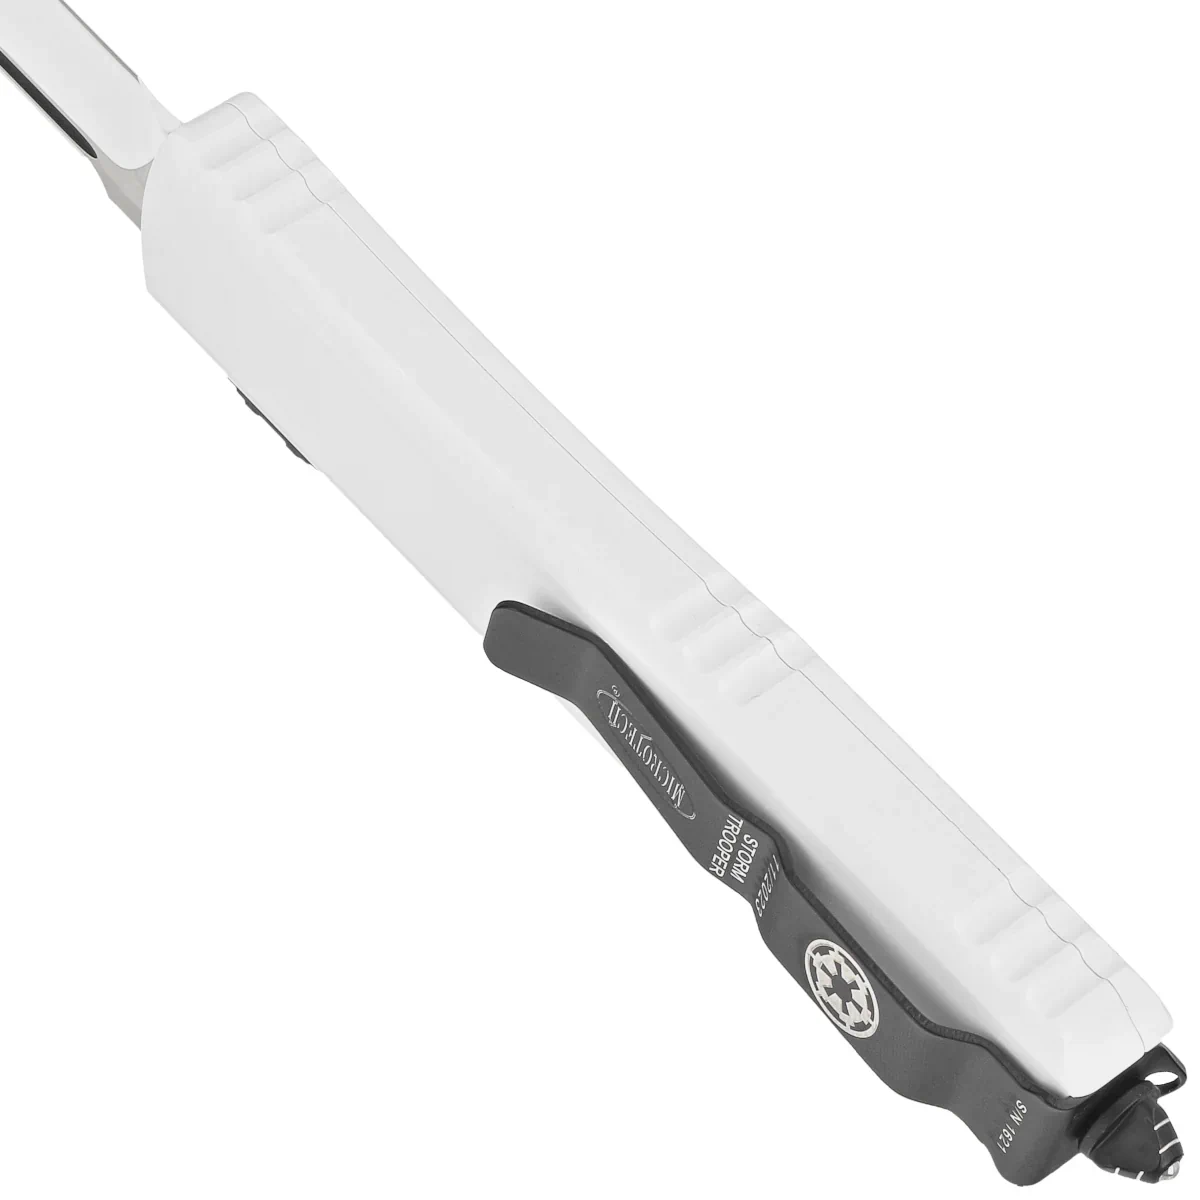 Microtech Ultratech S/E Signature Storm Trooper White Aluminium, White M390  by Tony Marfione OTF automatic knife (121-1STD)